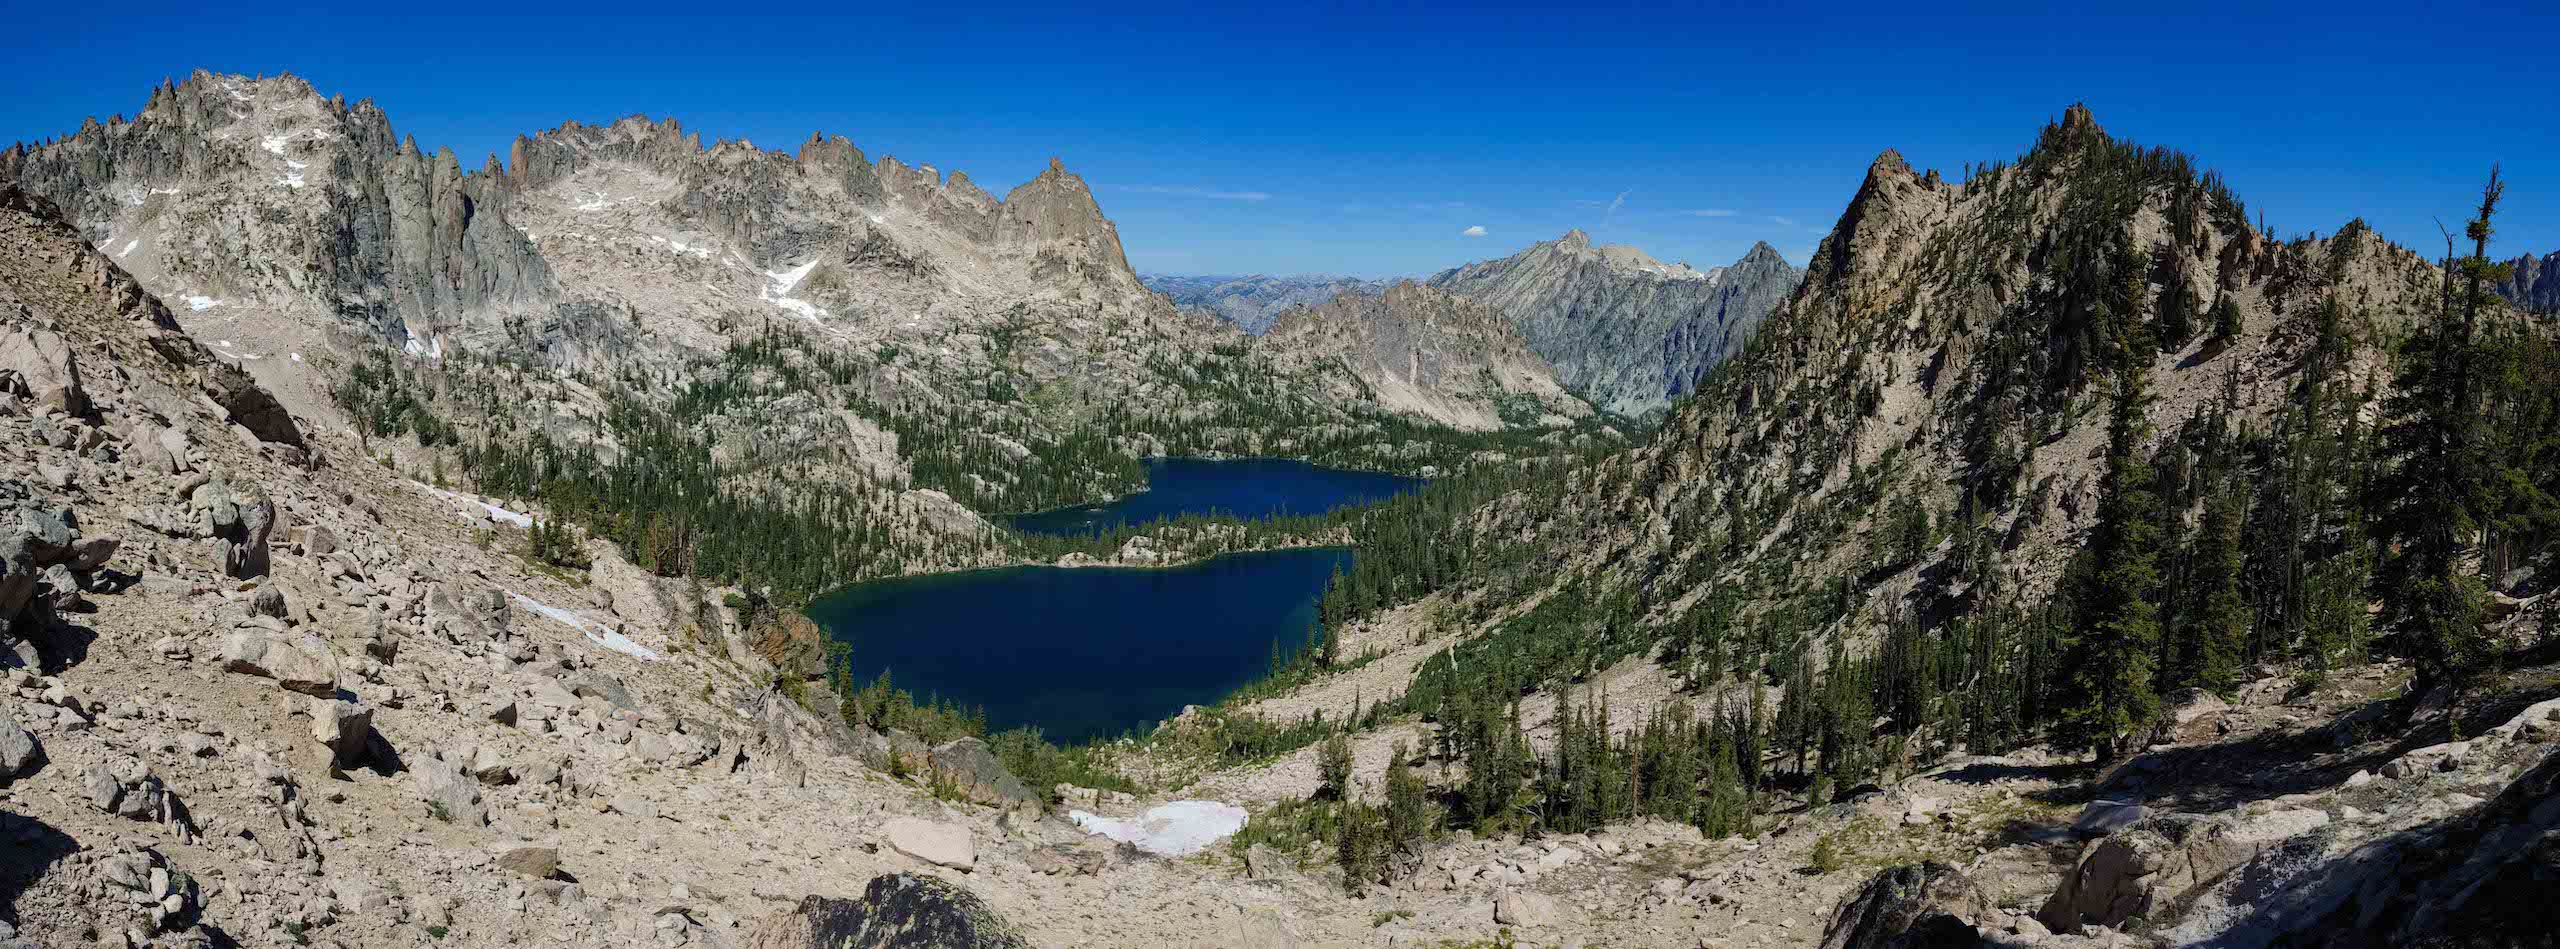 Baron Lakes in Idaho's Sawtooth Range